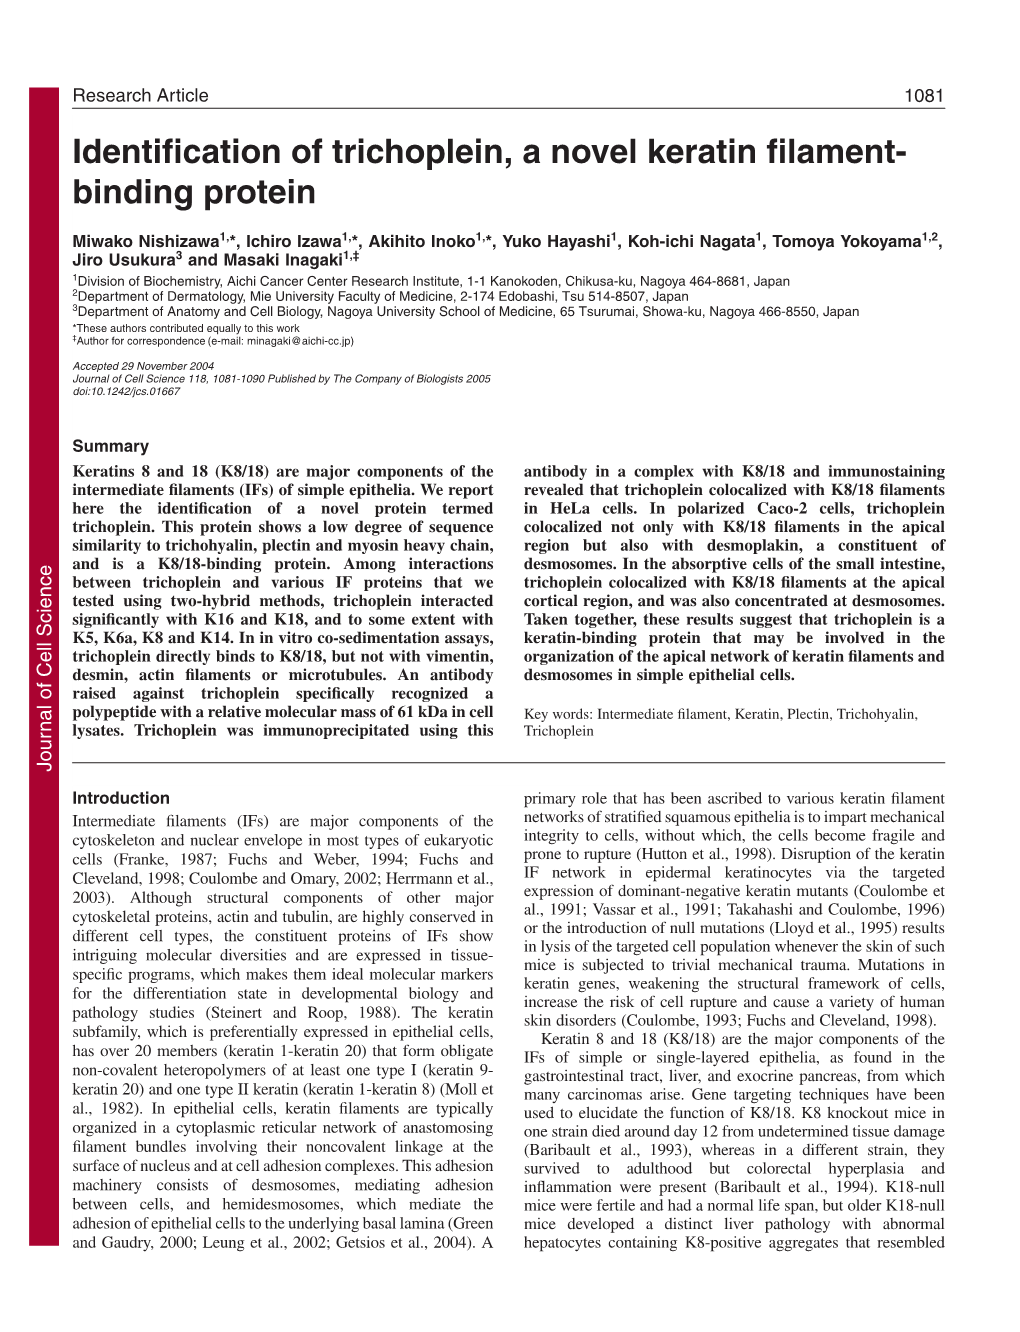 Identification of Trichoplein, a Novel Keratin Filament- Binding Protein